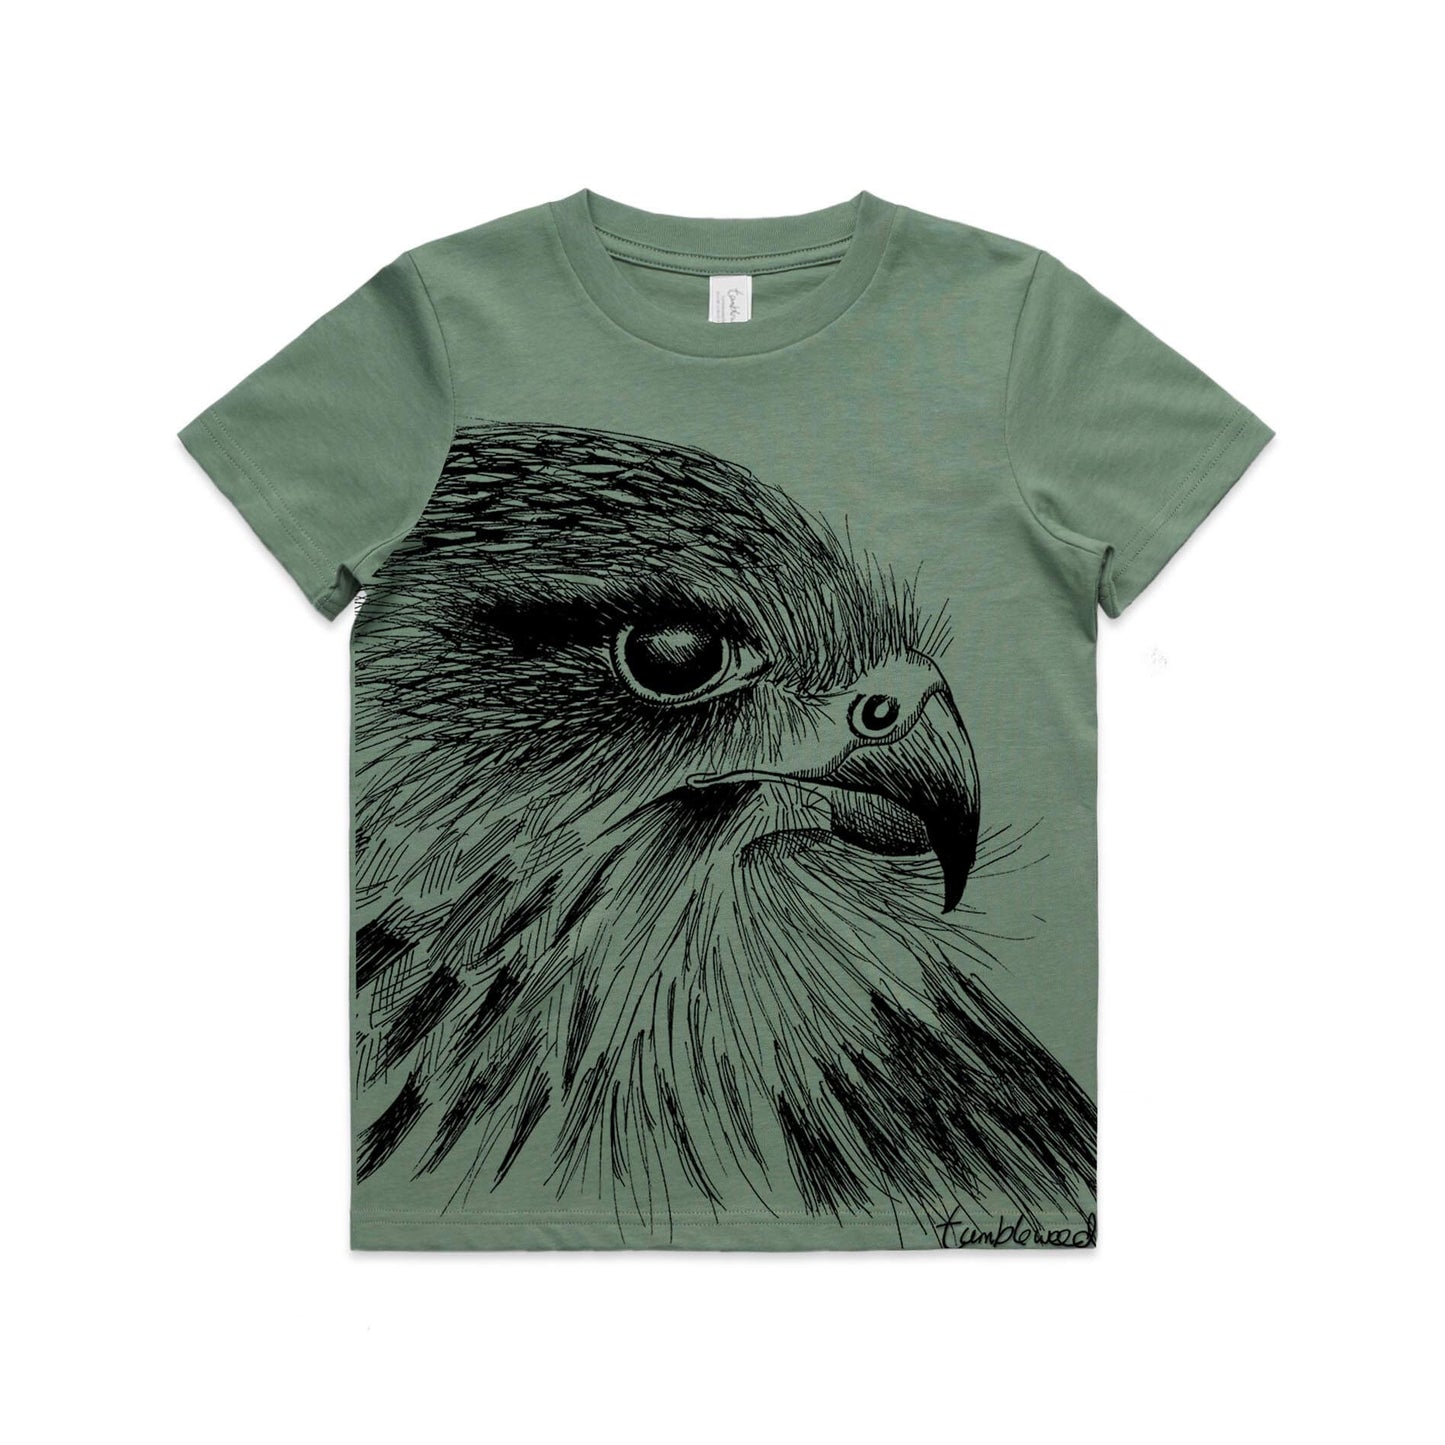 Sage, cotton kids' t-shirt with screen printed Kids Karearea/NZ Falcon design.